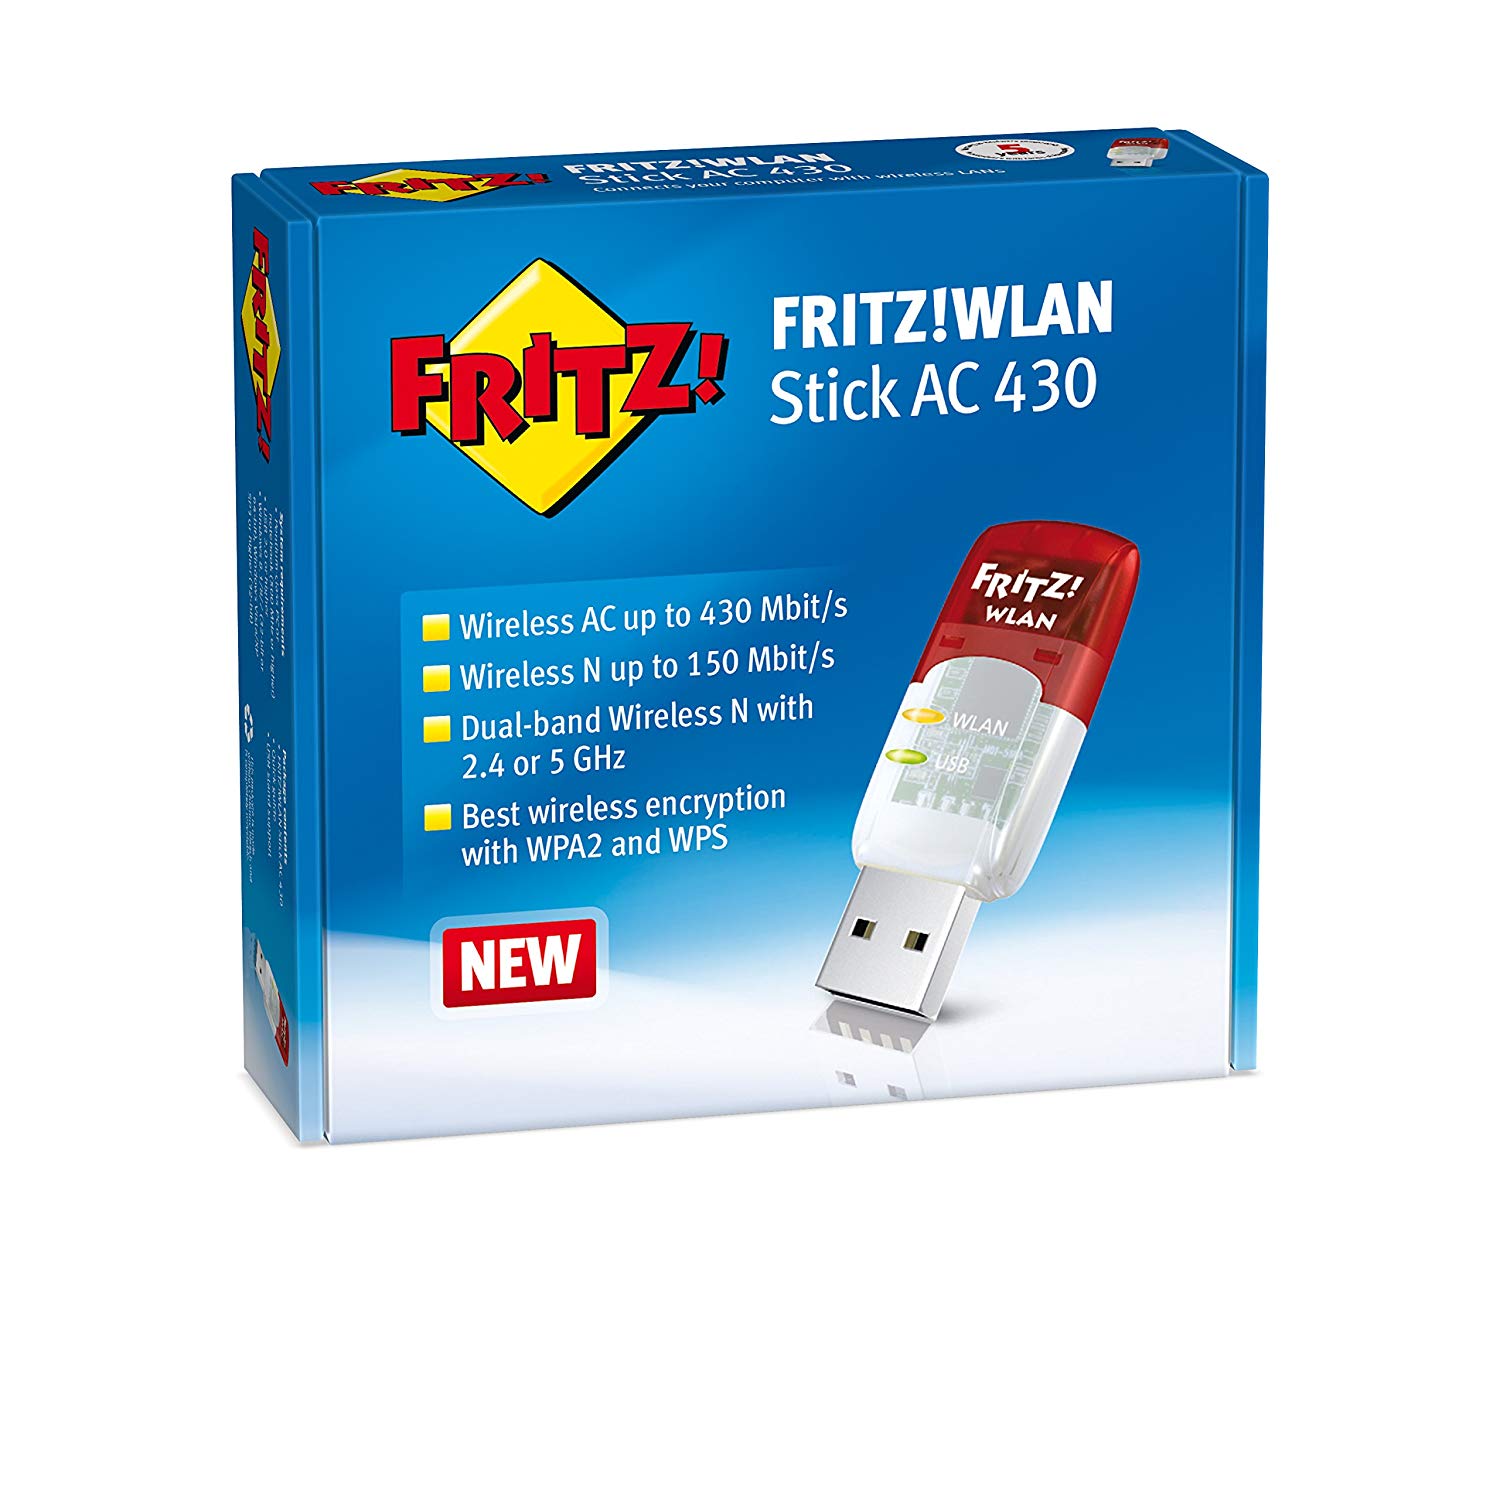 FRITZ!WLAN Stick AC 430 – Recensione